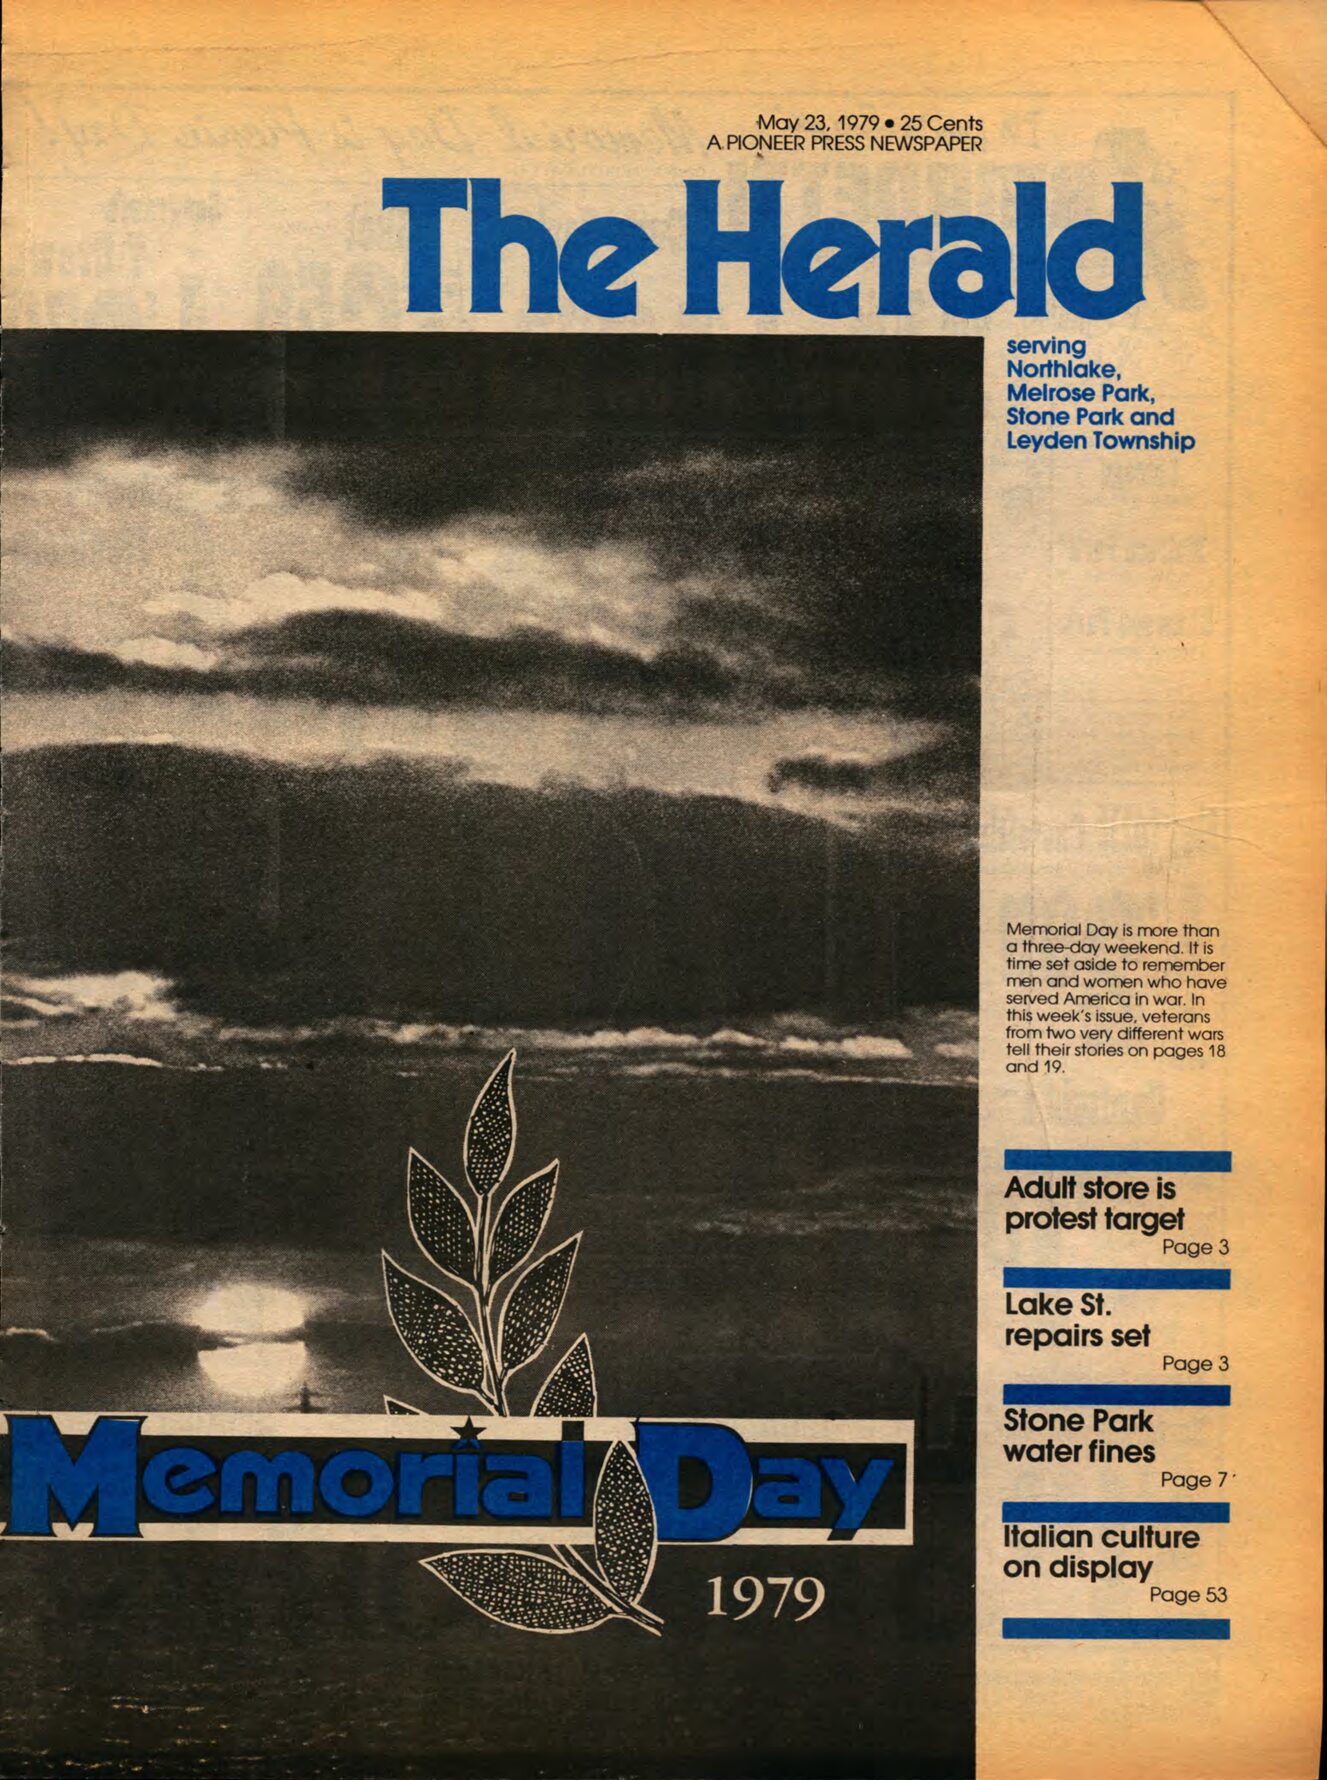 The Herald – 19790523